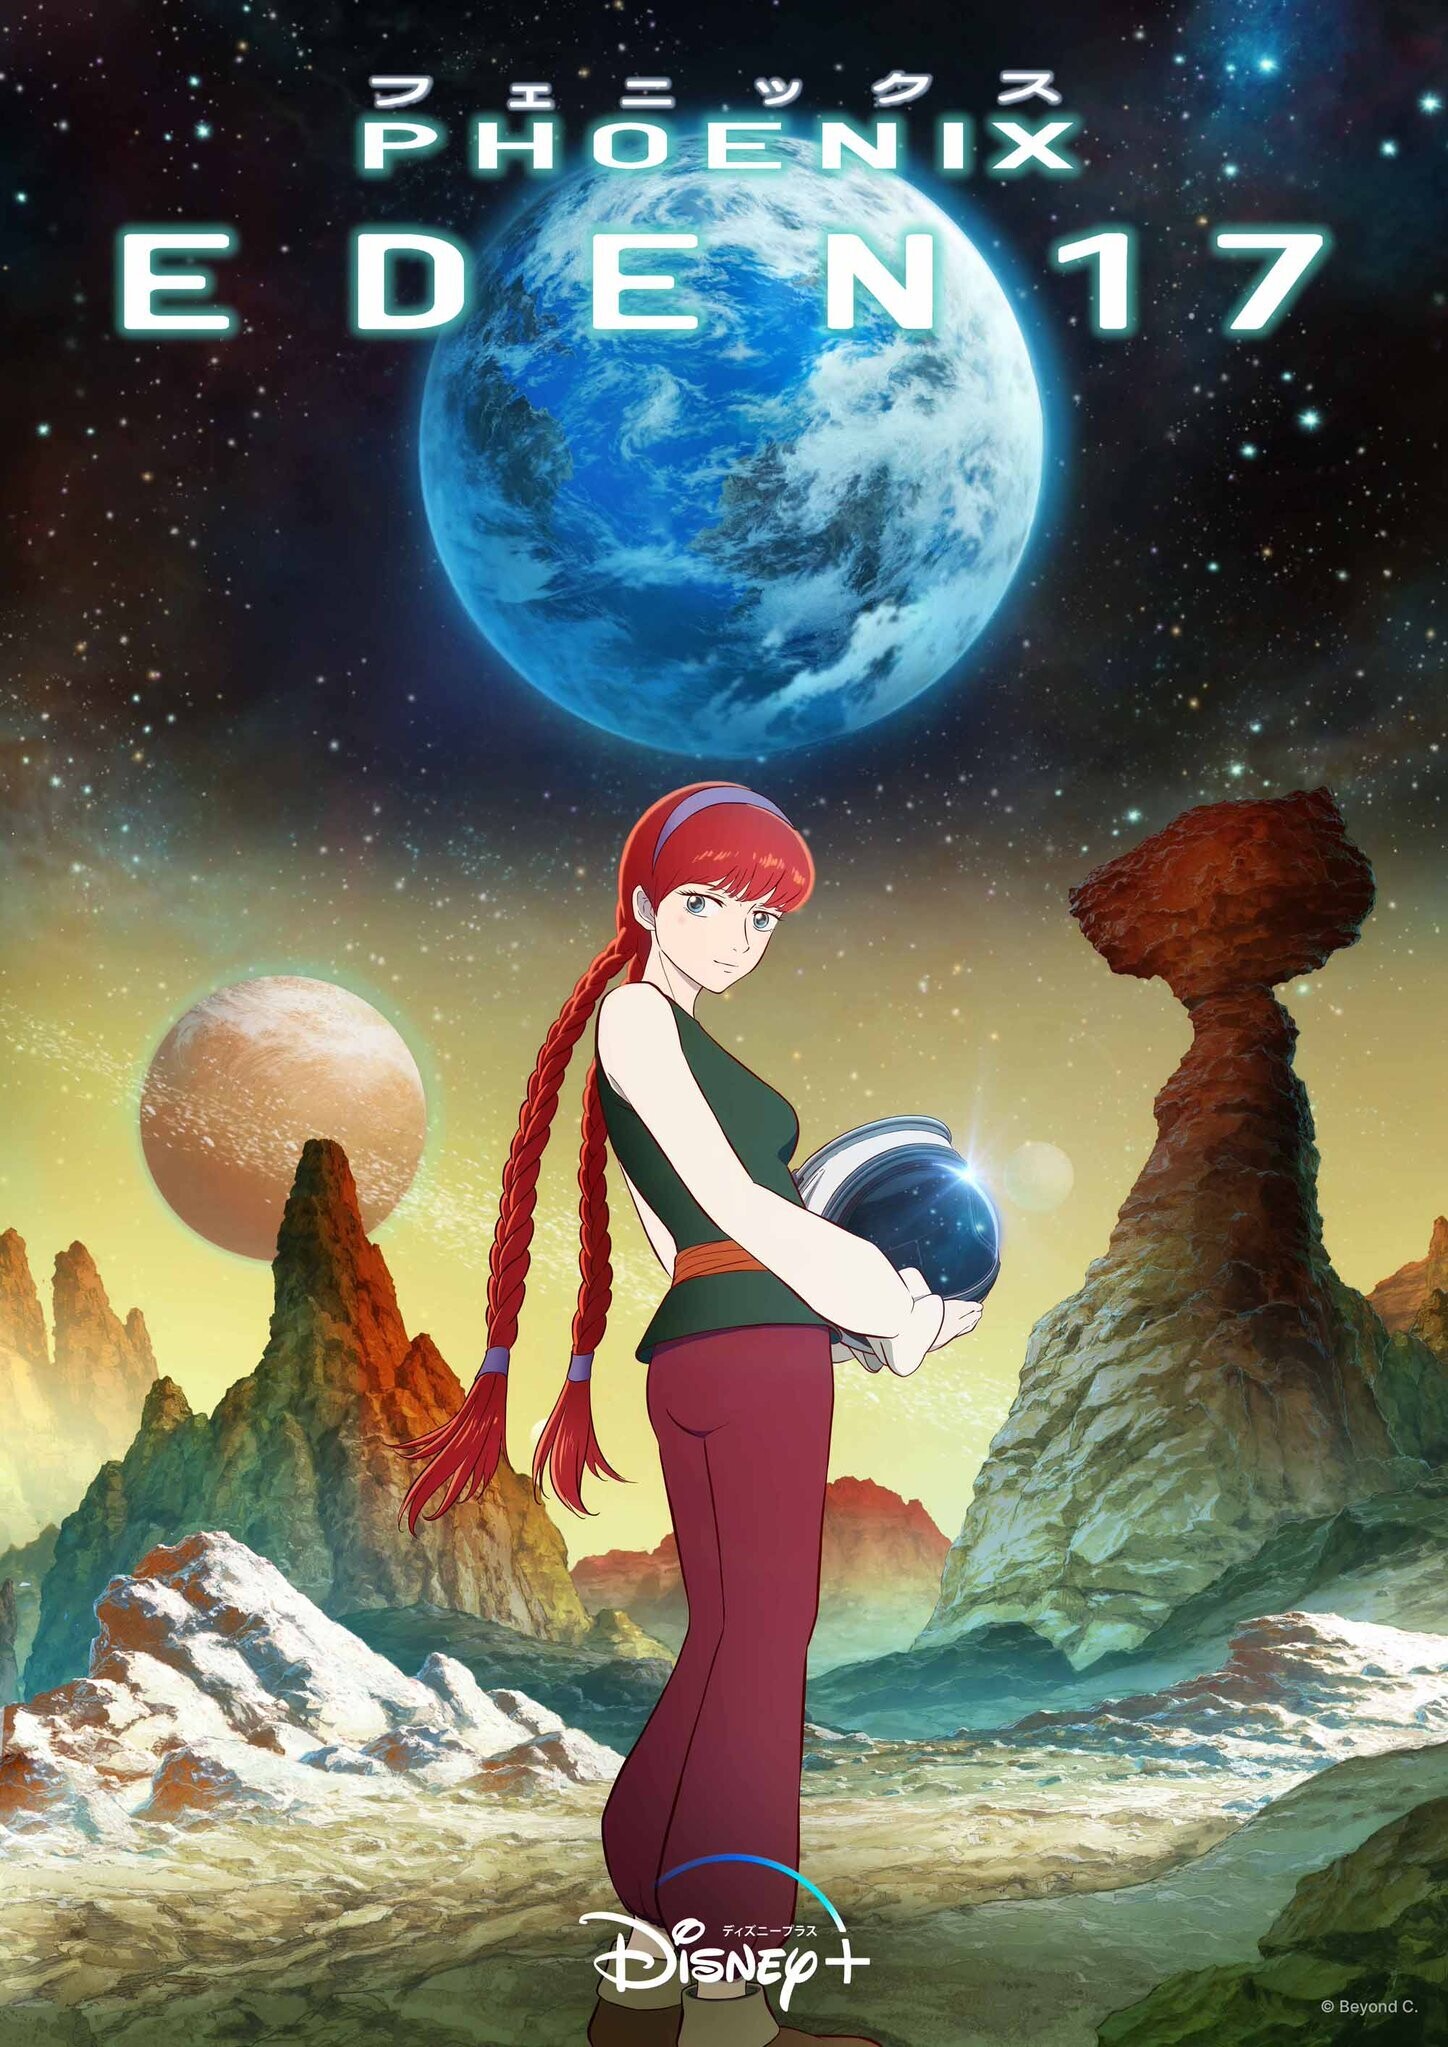 Disney представил трейлер аниме Phoenix: Eden17 по манге Осаму Тэдзуки - фото 1